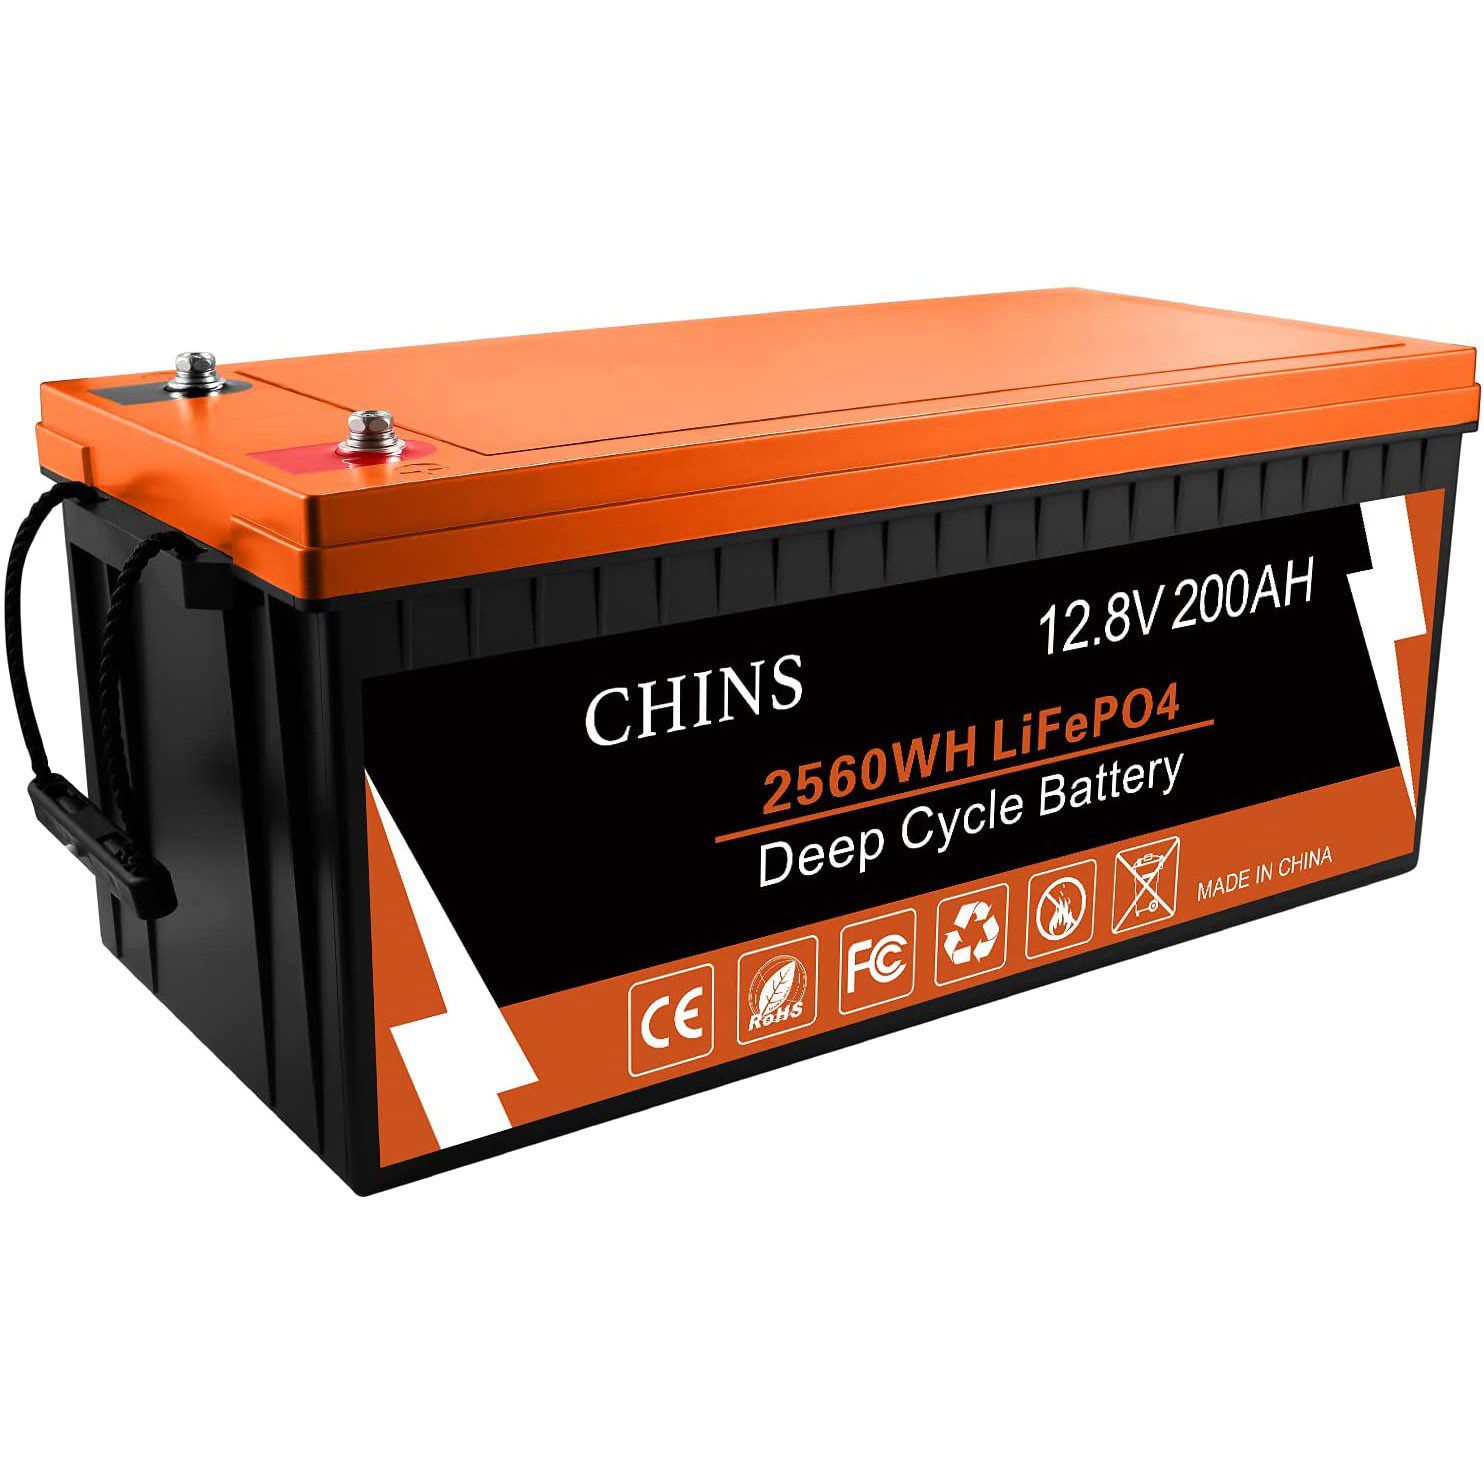 https://nomadicsupply.com/wp-content/uploads/CHINS-200AH-Smart-12.8V-LiFePO4-Lithium-Battery-1.jpg